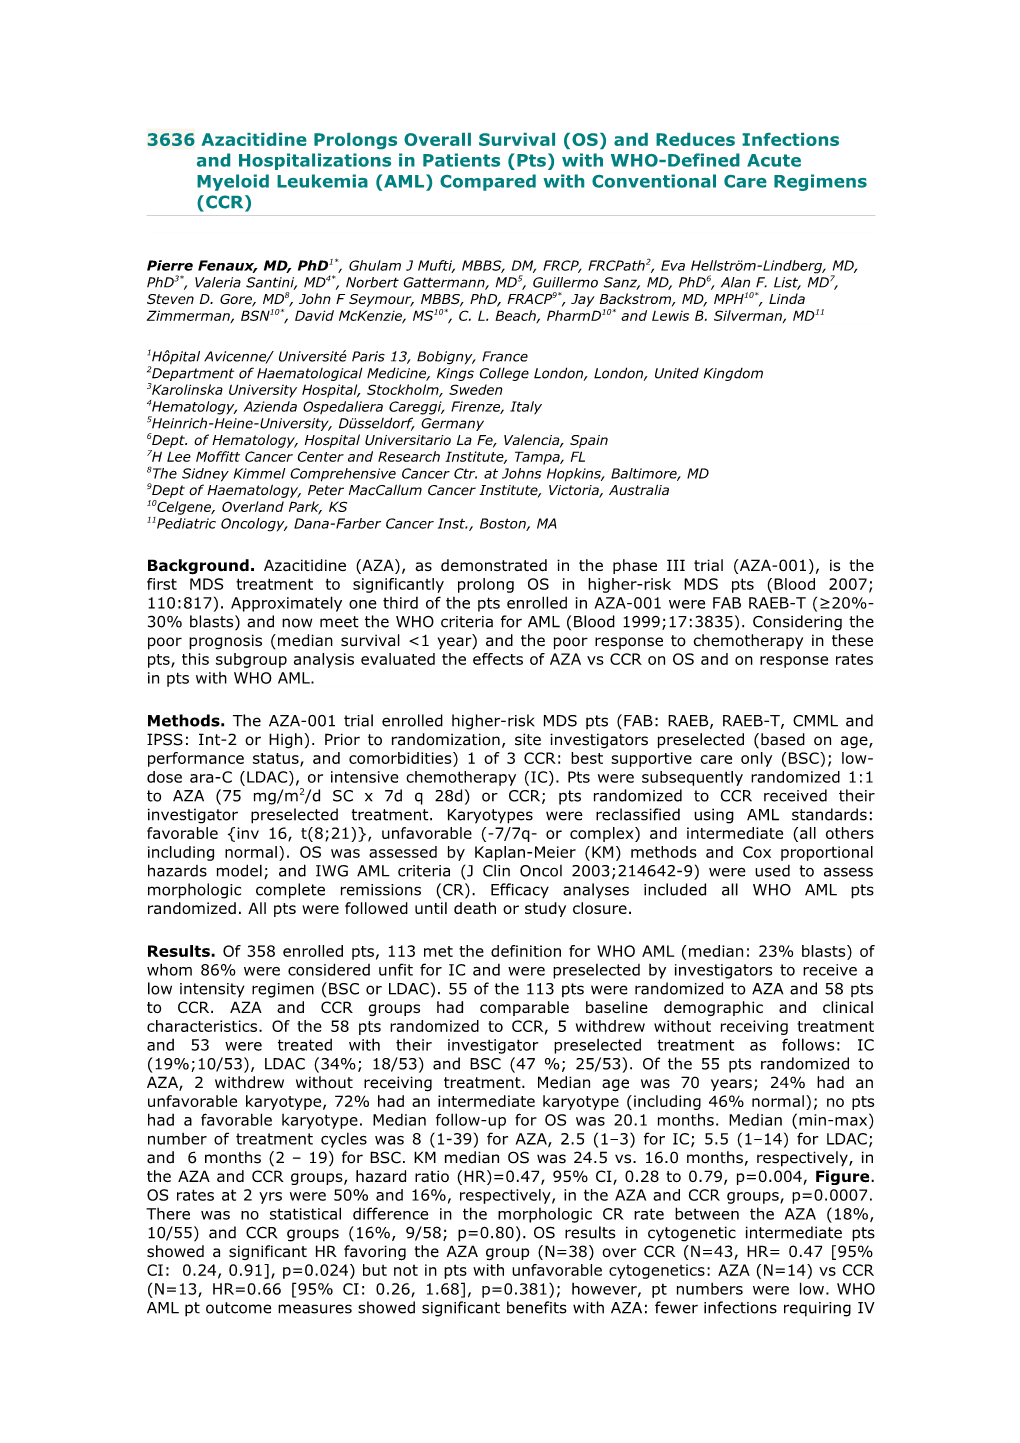 3291 Treatment of High-Risk (HR) Philadelphia Chromosome-Negative (Ph-) Adult Acute